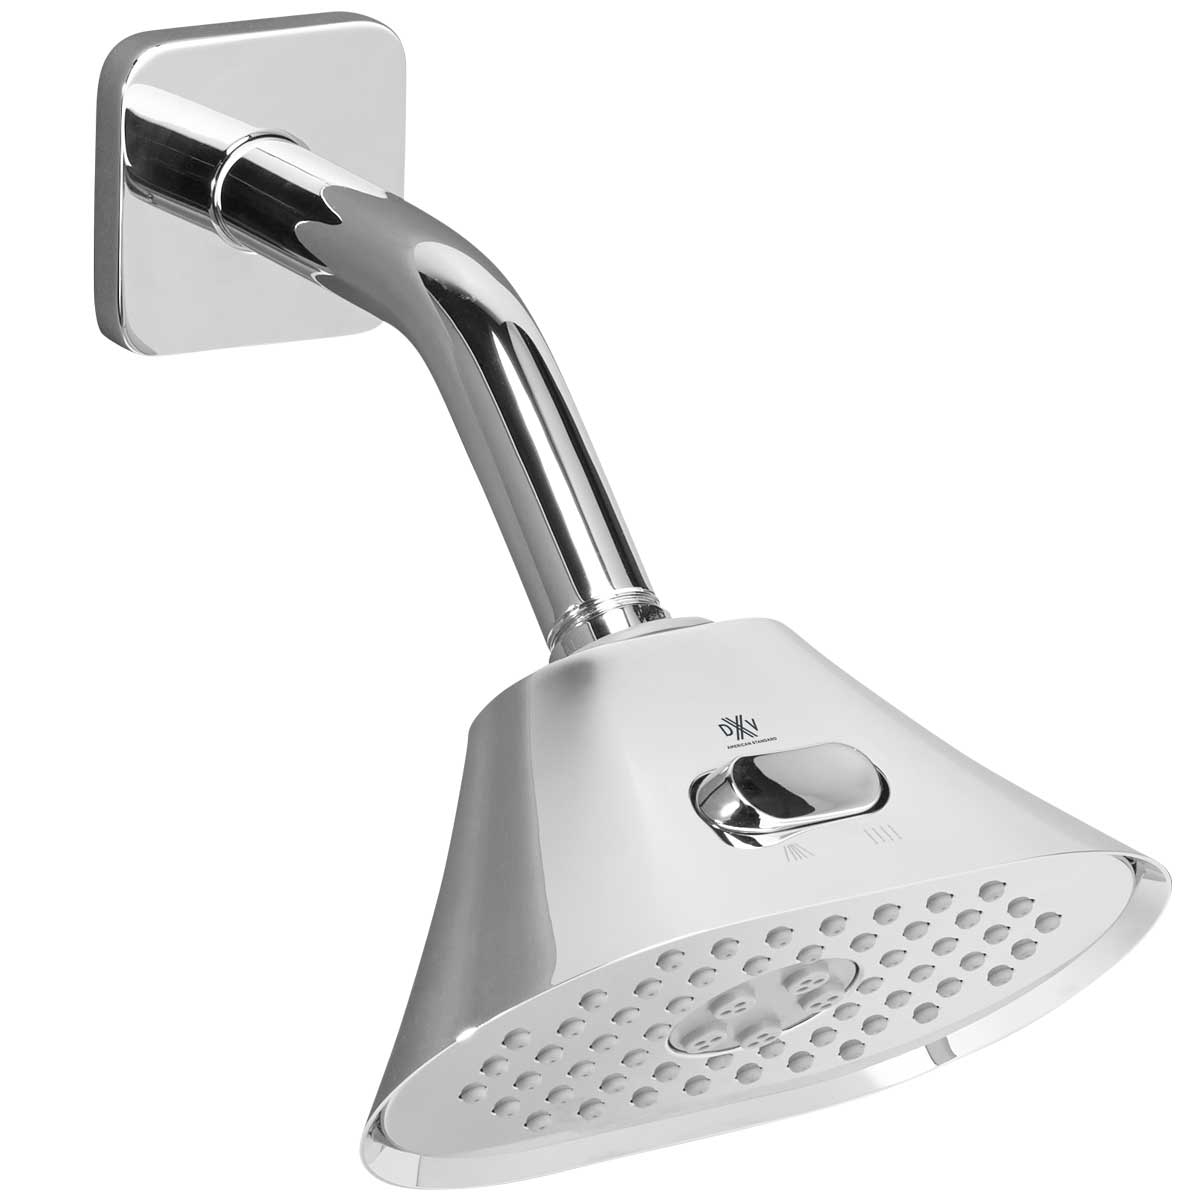 Equility water-saving multifunction showerhead